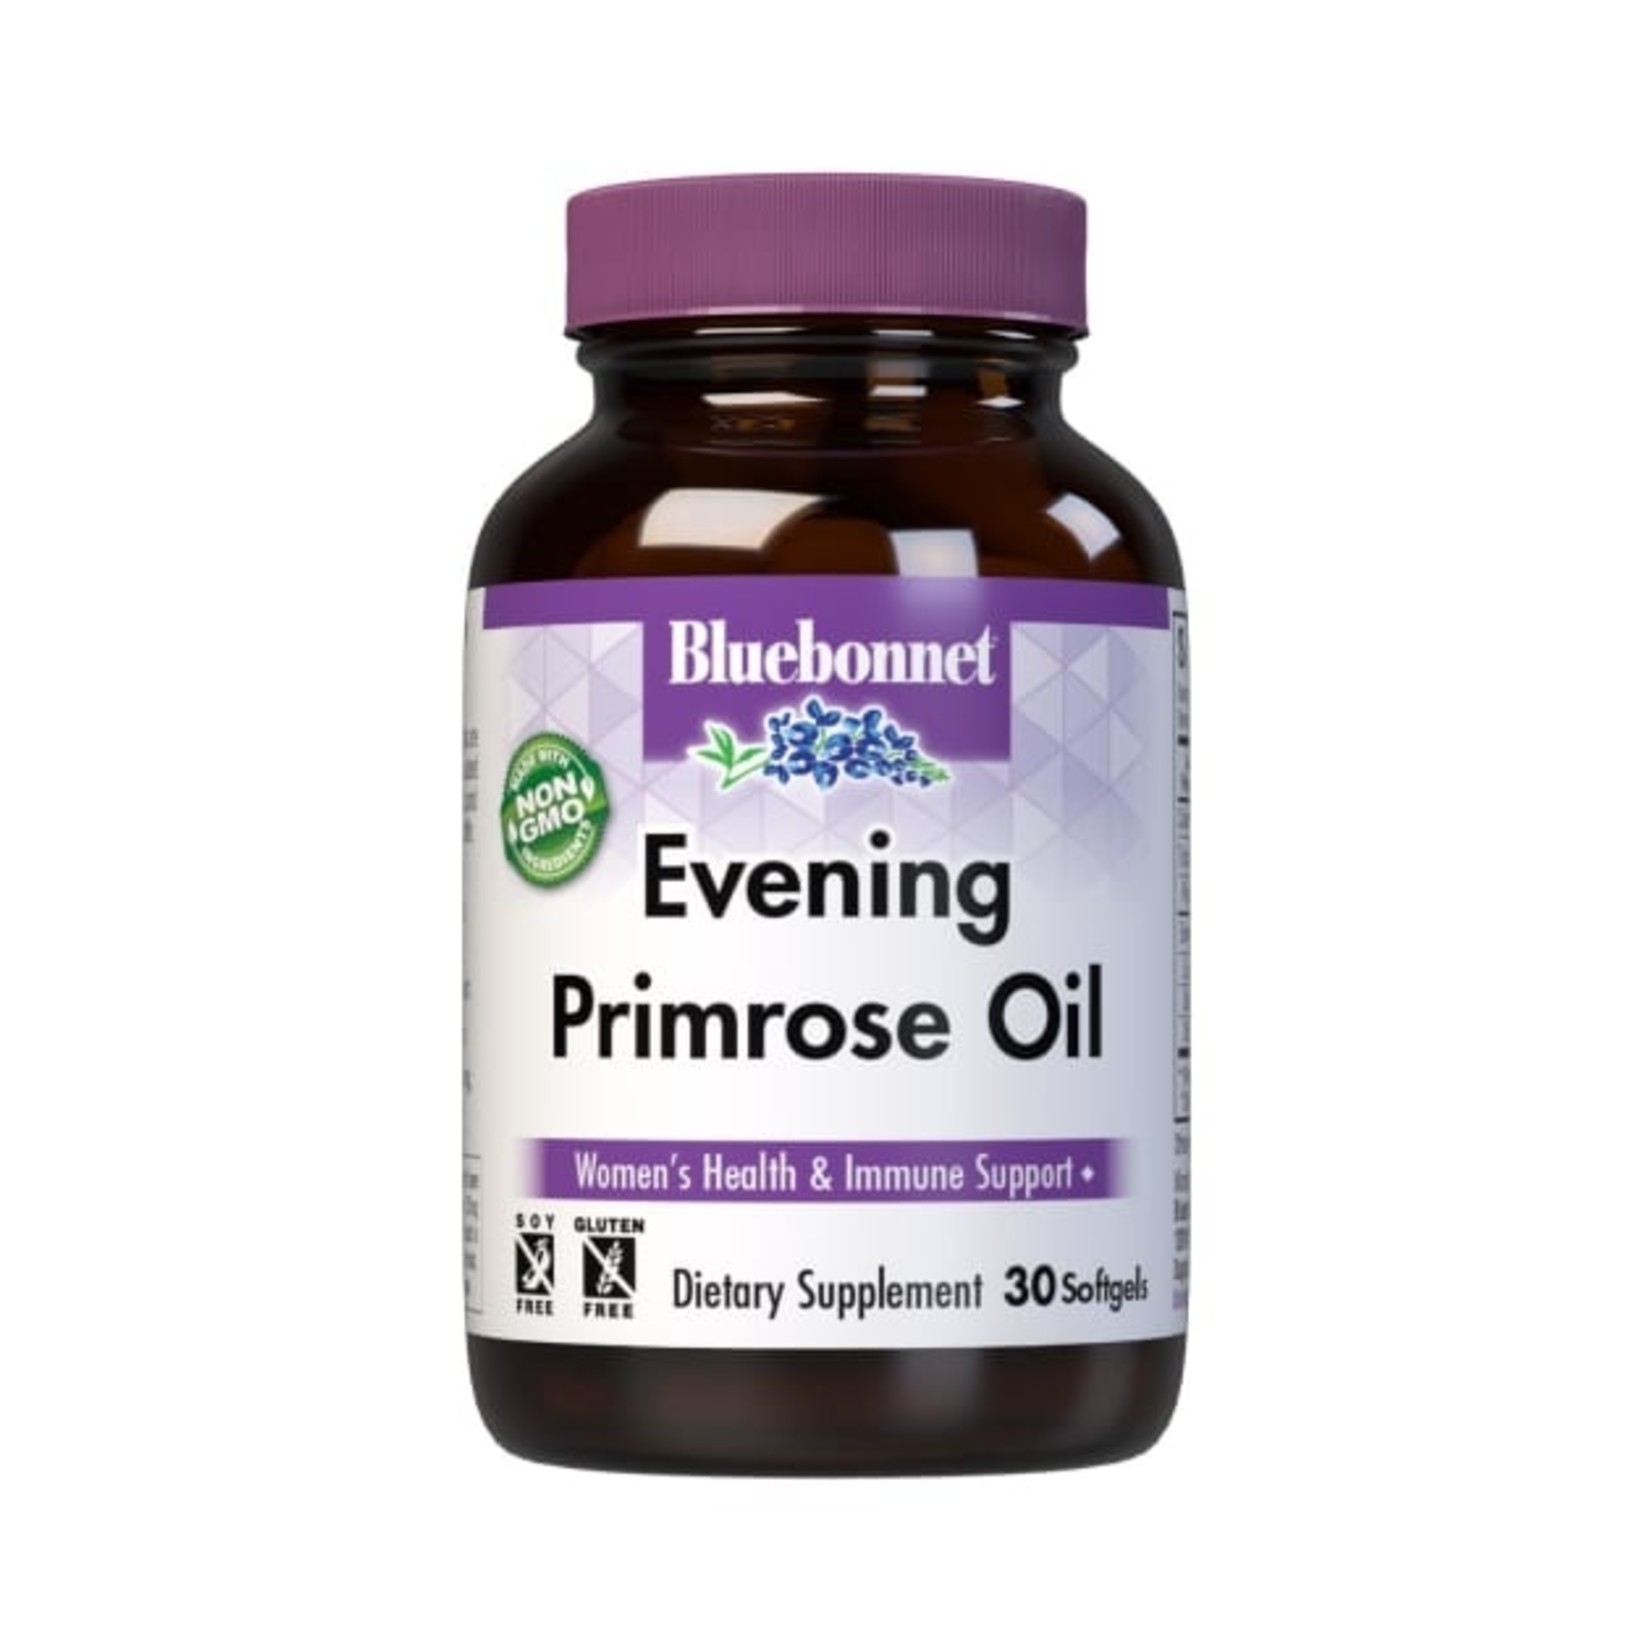 Bluebonnet Bluebonnet - Evening Primrose Oil 1300 mg - 30 Softgels